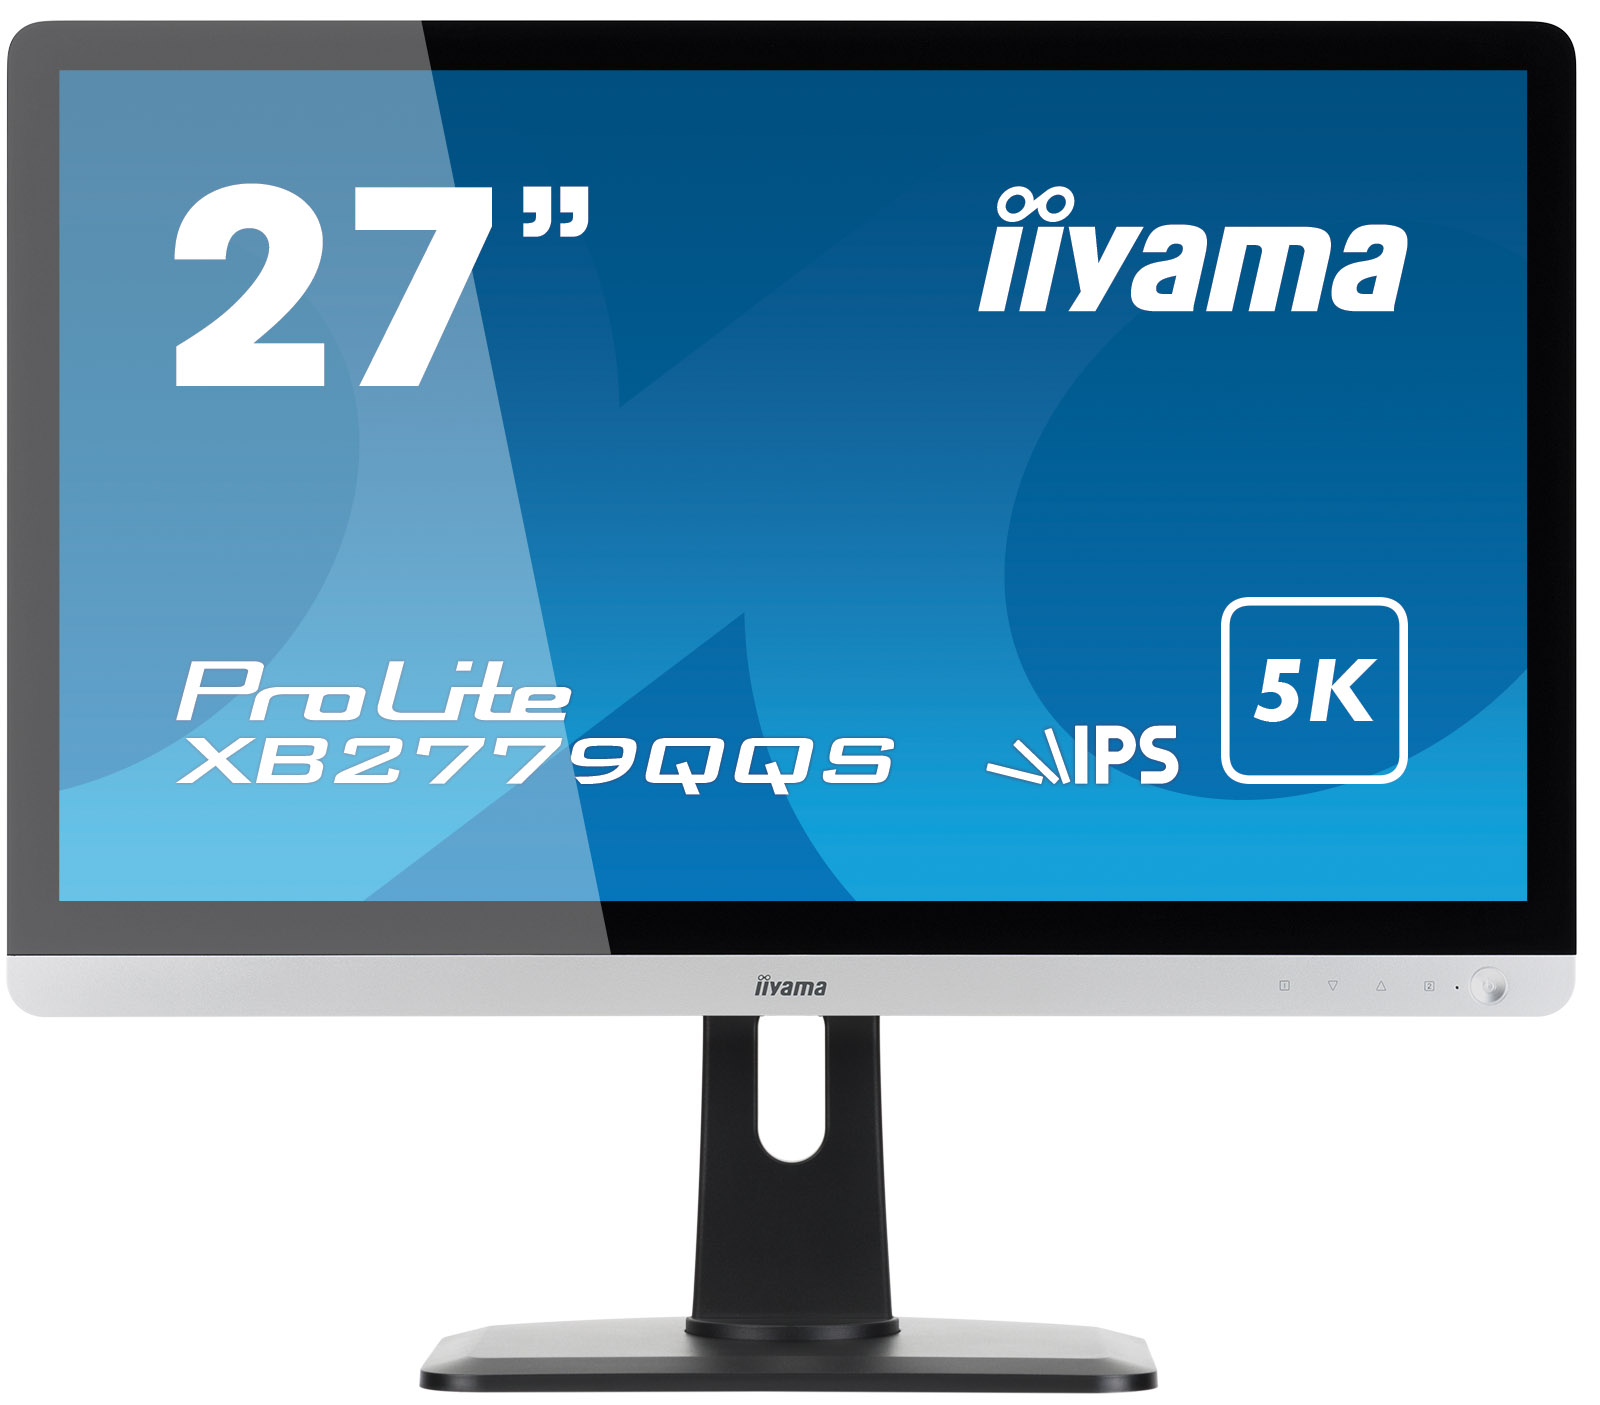 Iiyama's ProLite XB2779QQS: a 27-inch 5K IPS Monitor for $900